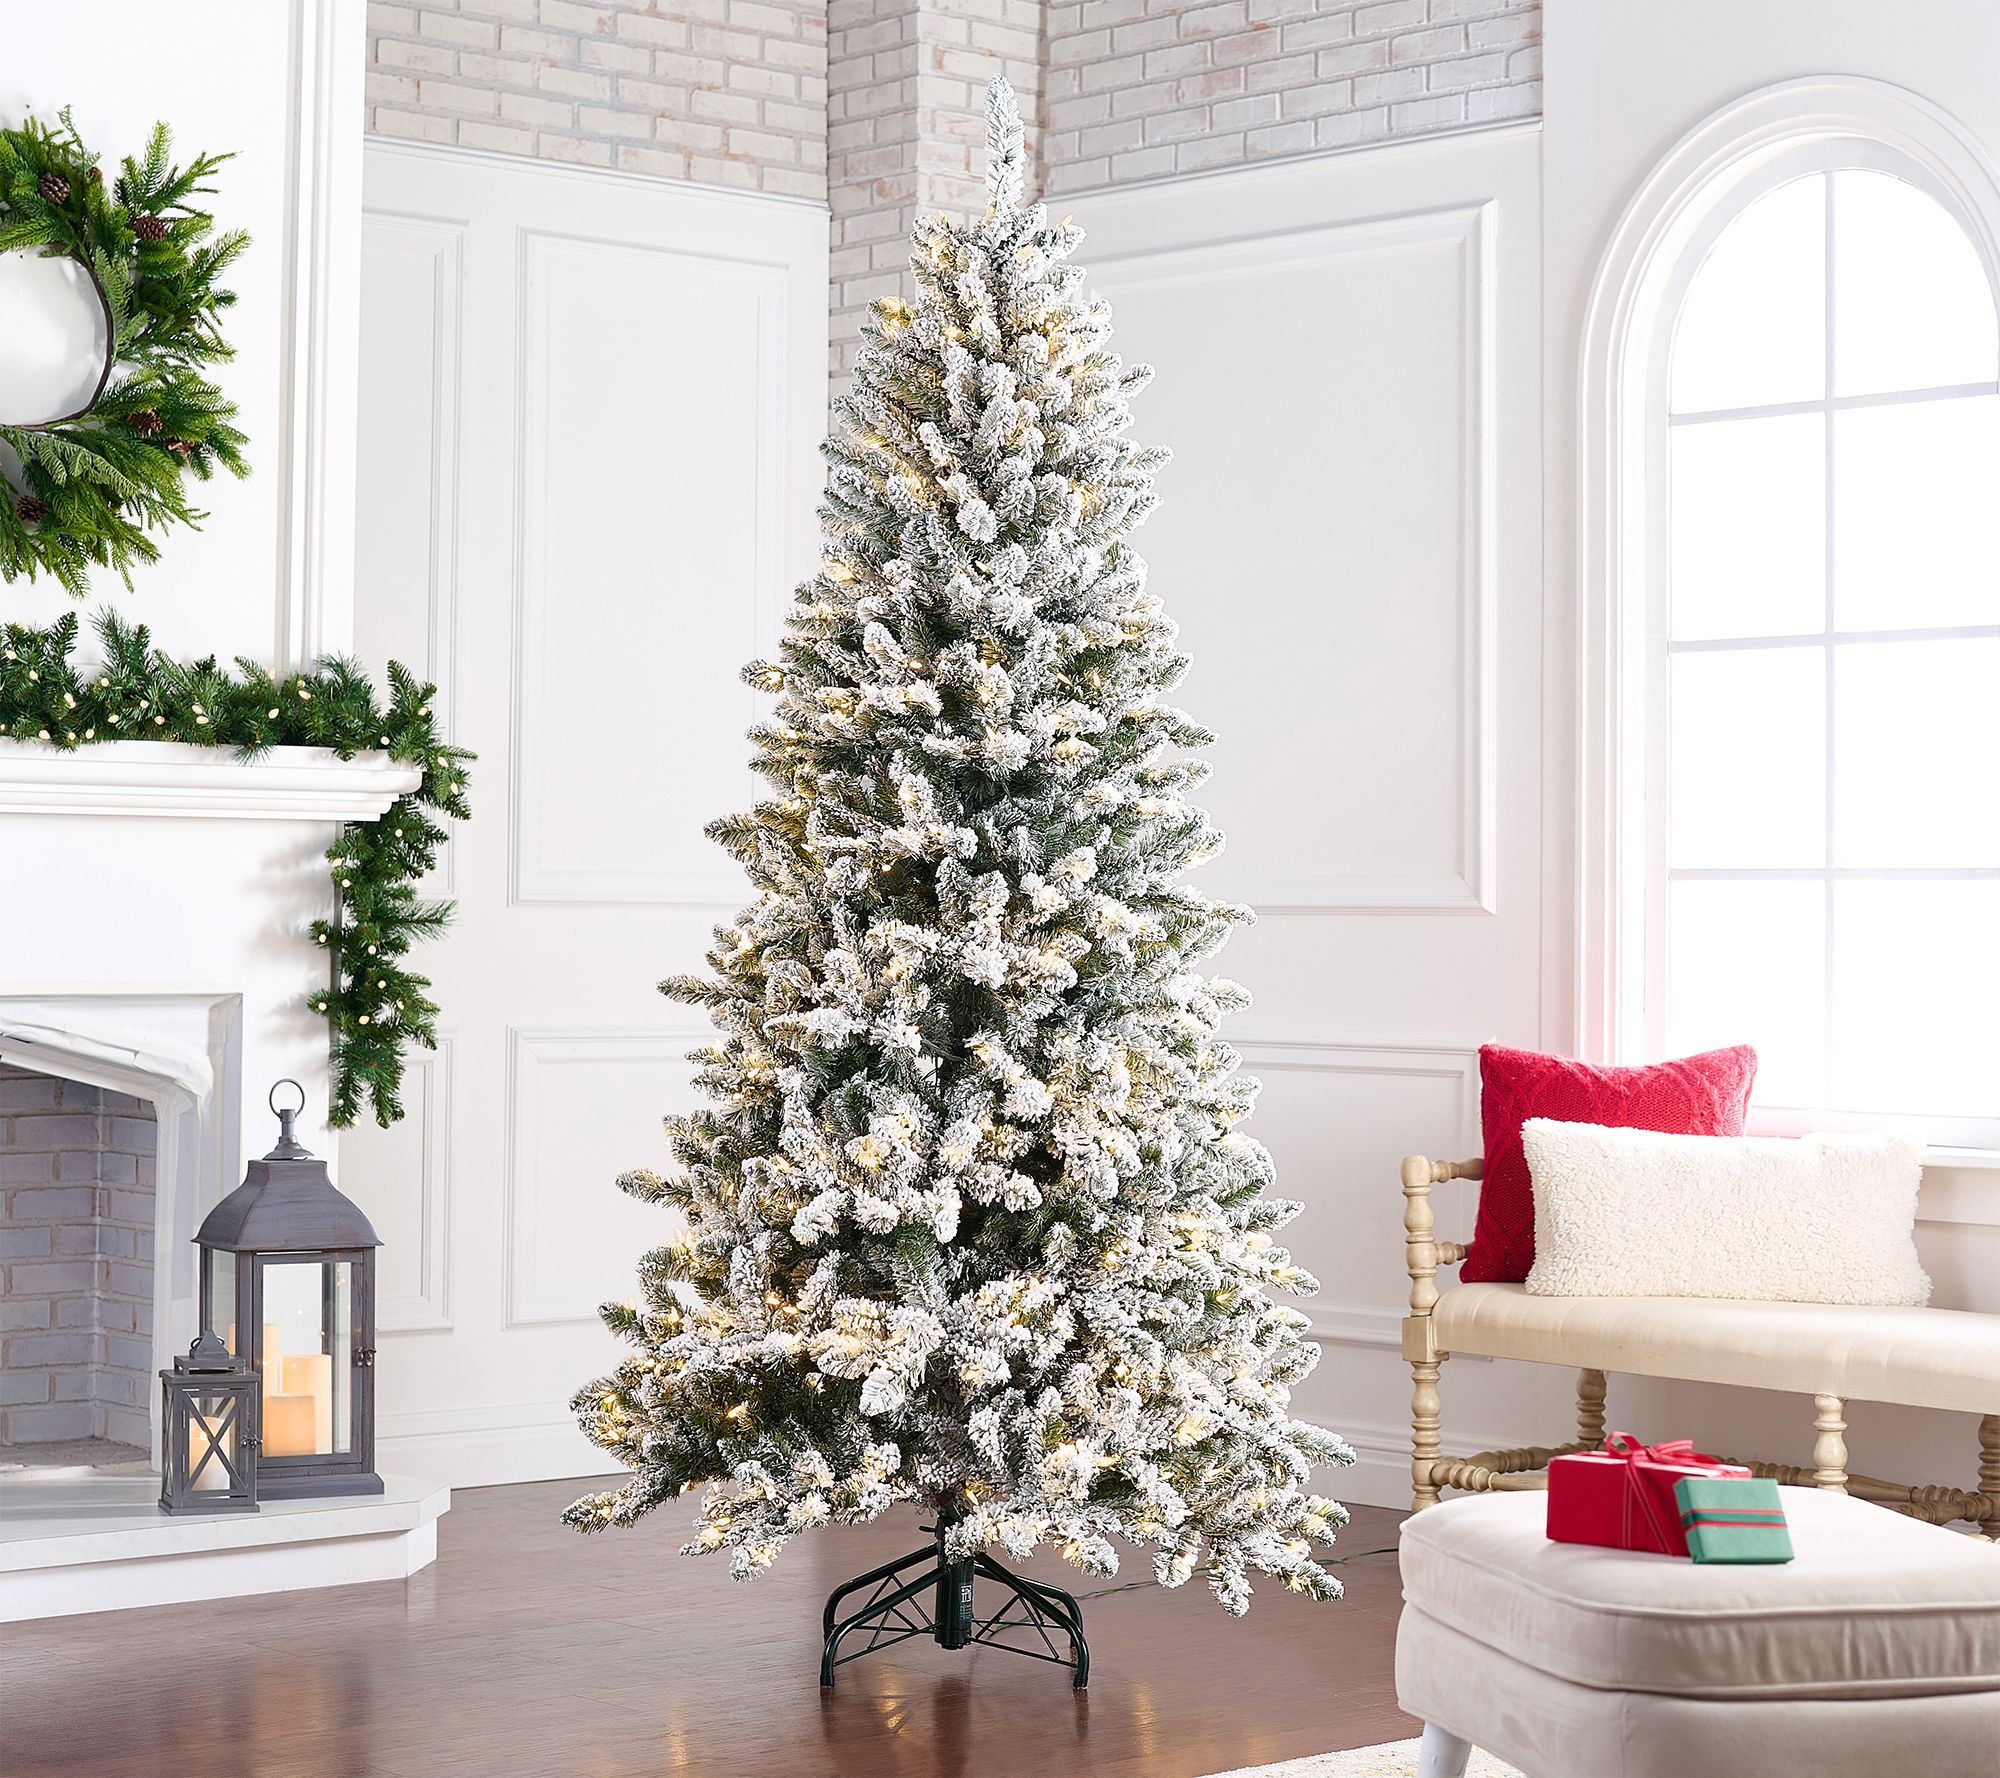 Merri Mac Kits Holiday Shopping Purse Ornaments Christmas Kits - Brand New